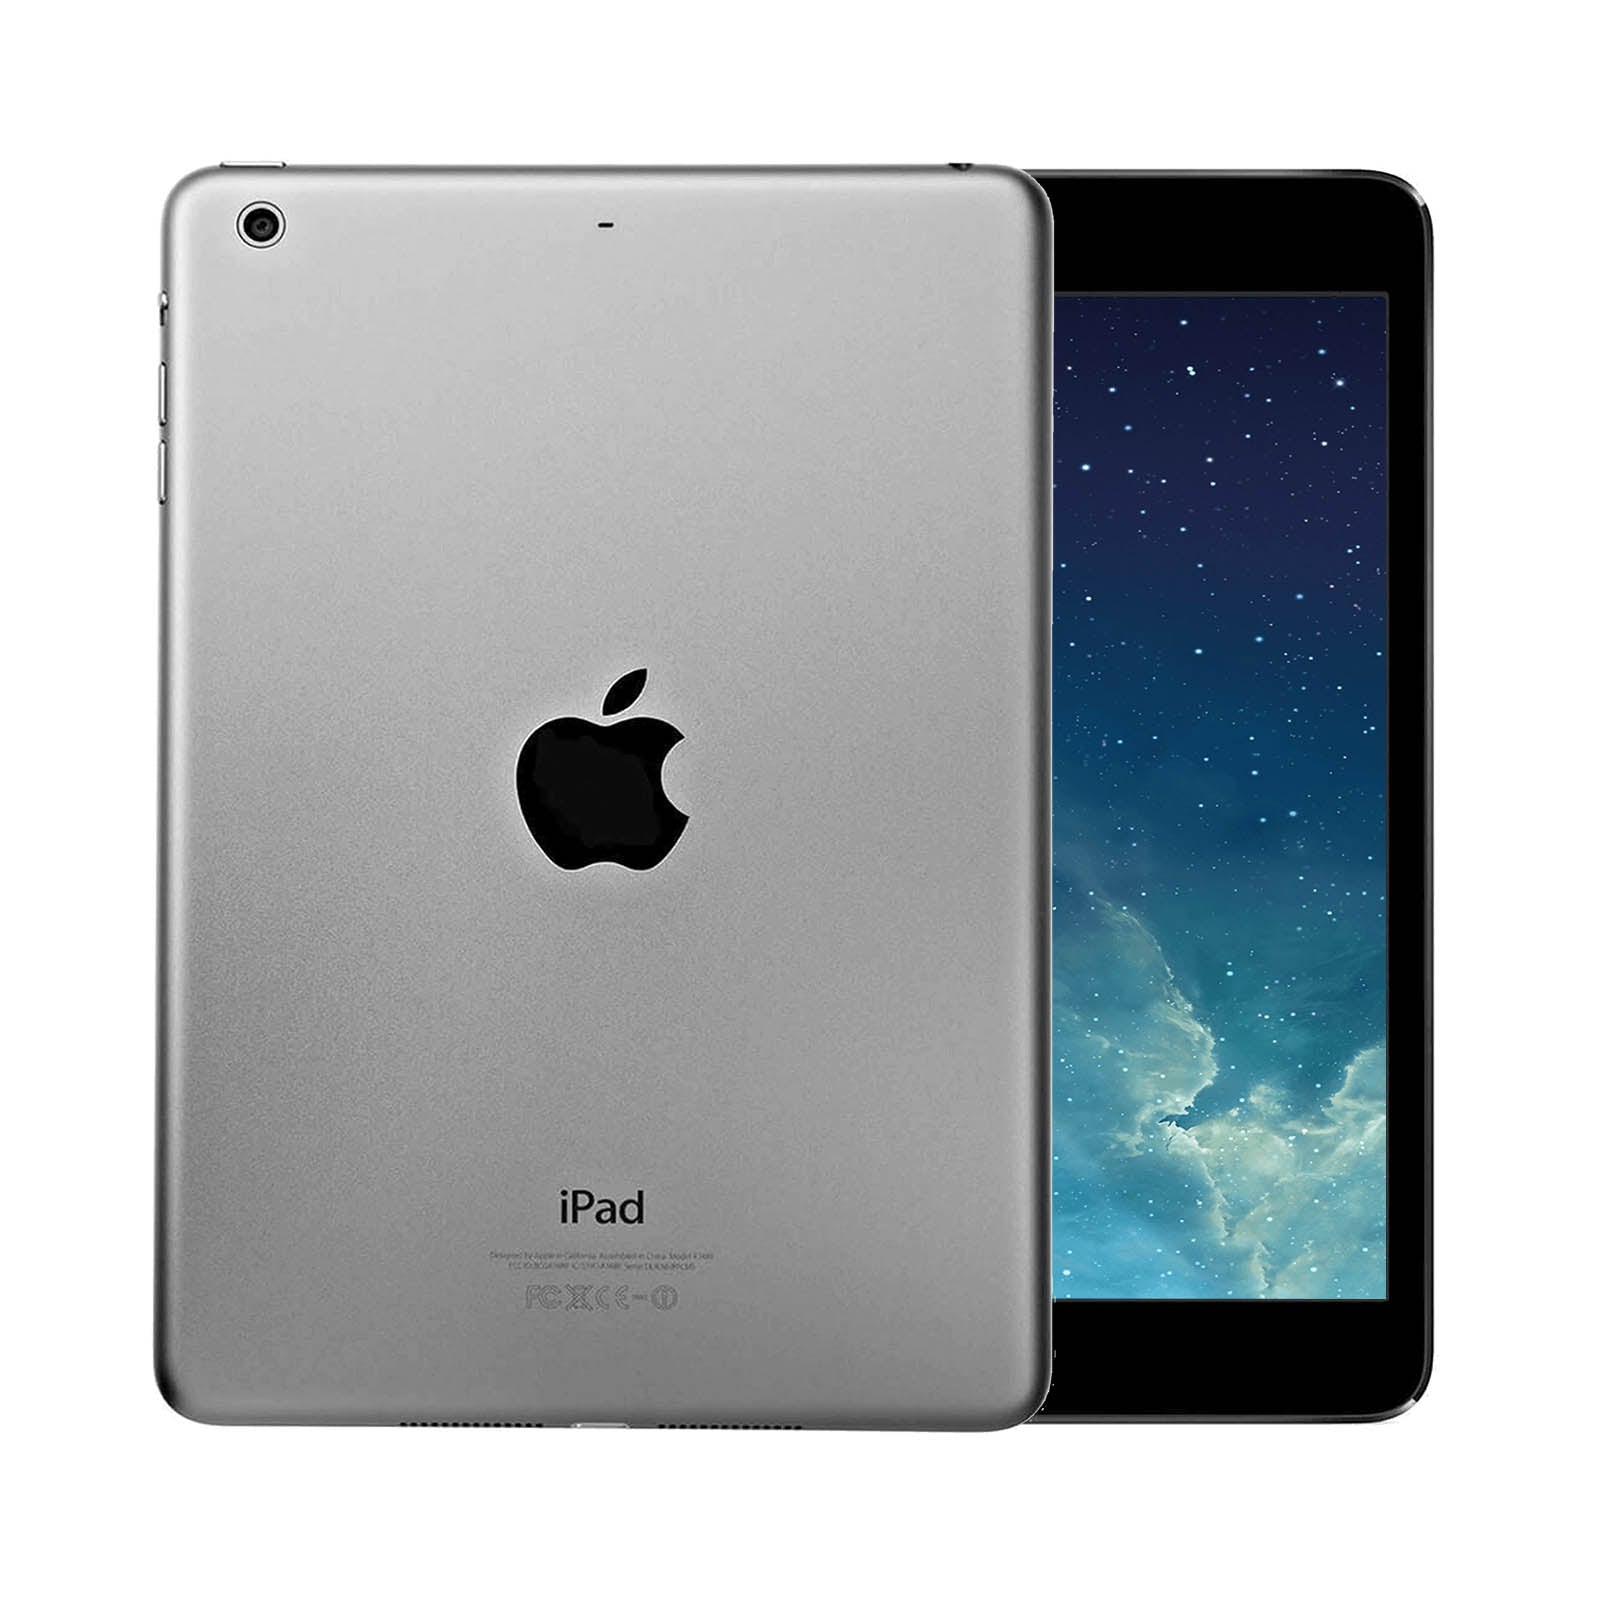 iPad Air 16GB WiFi Space Grey Fair-Unlocked